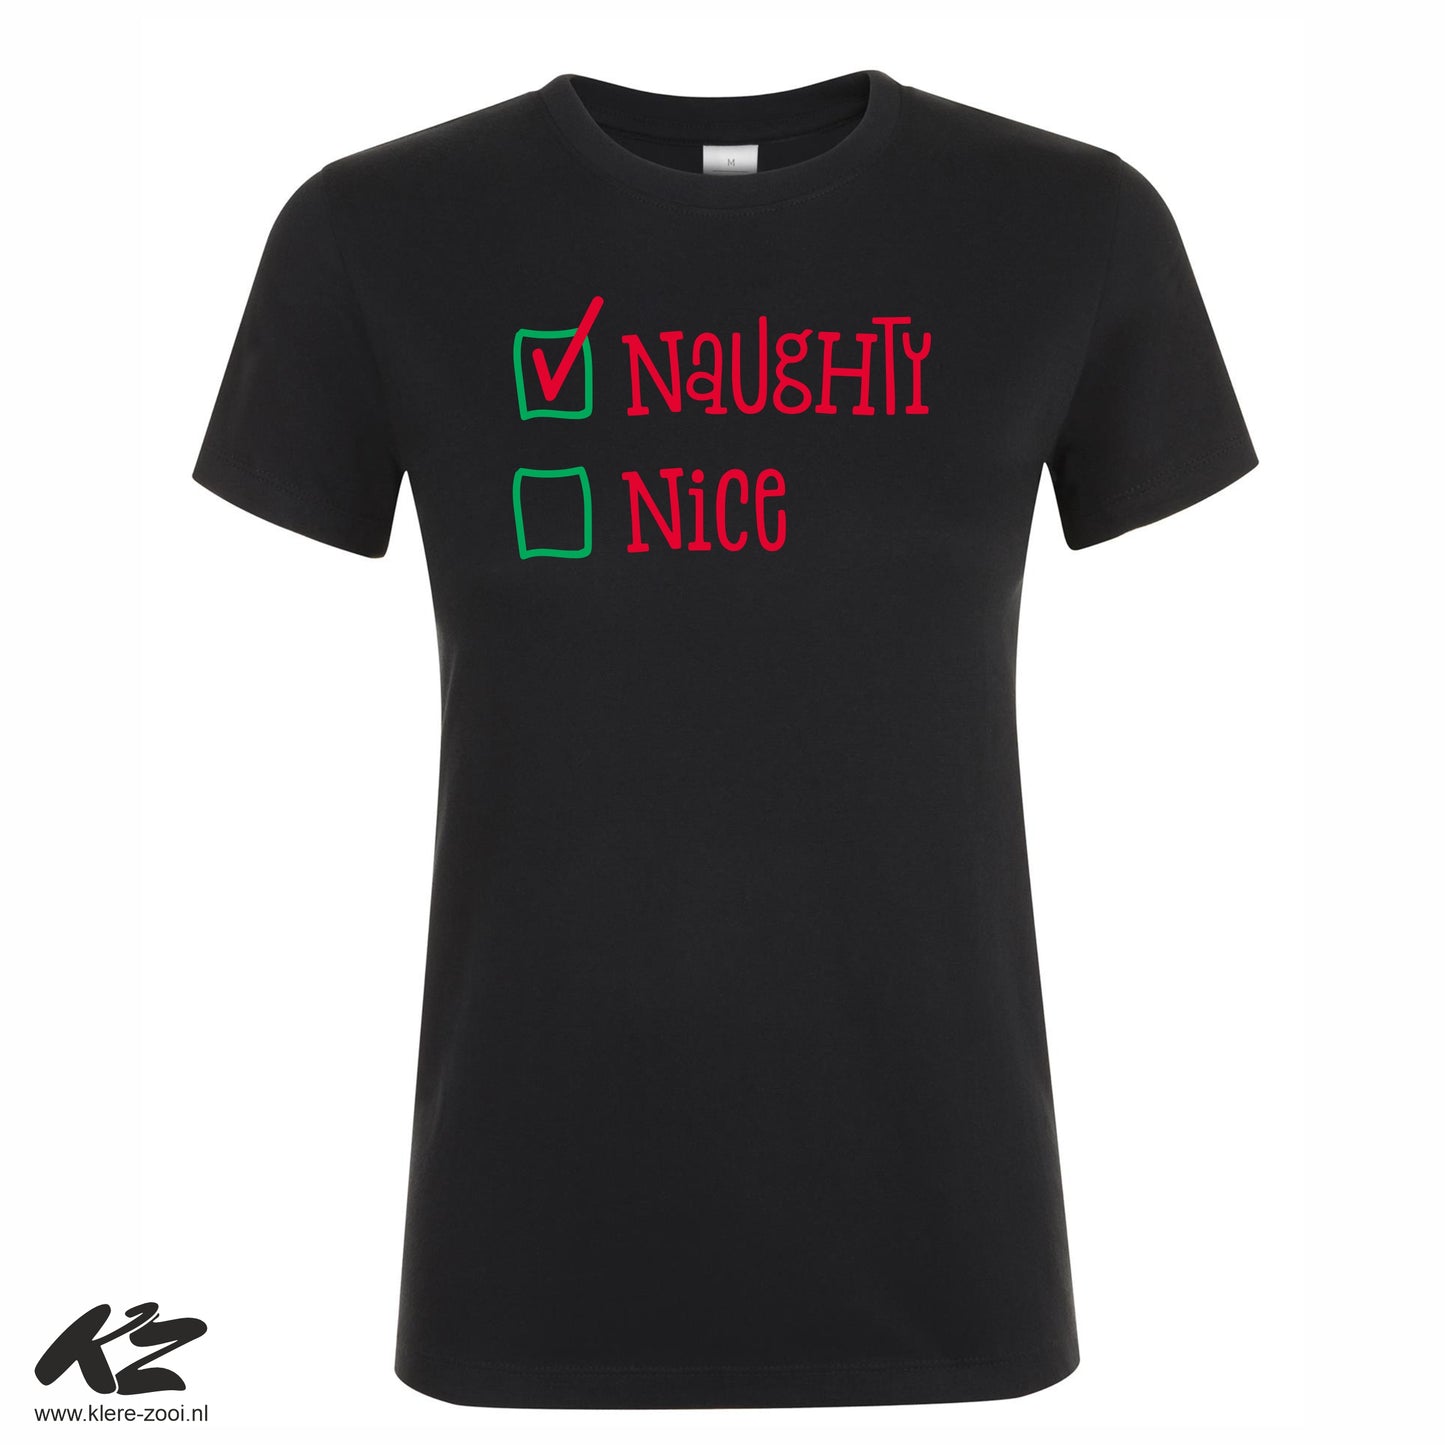 Naughty / Nice